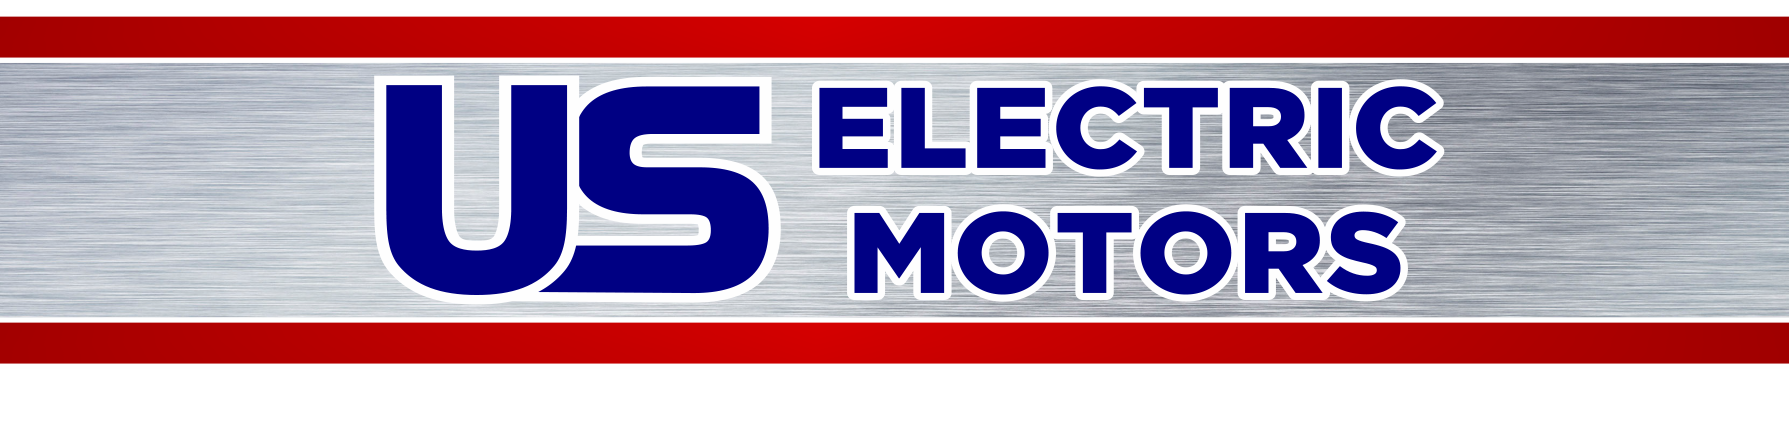 US Electric Motors Sales & Service